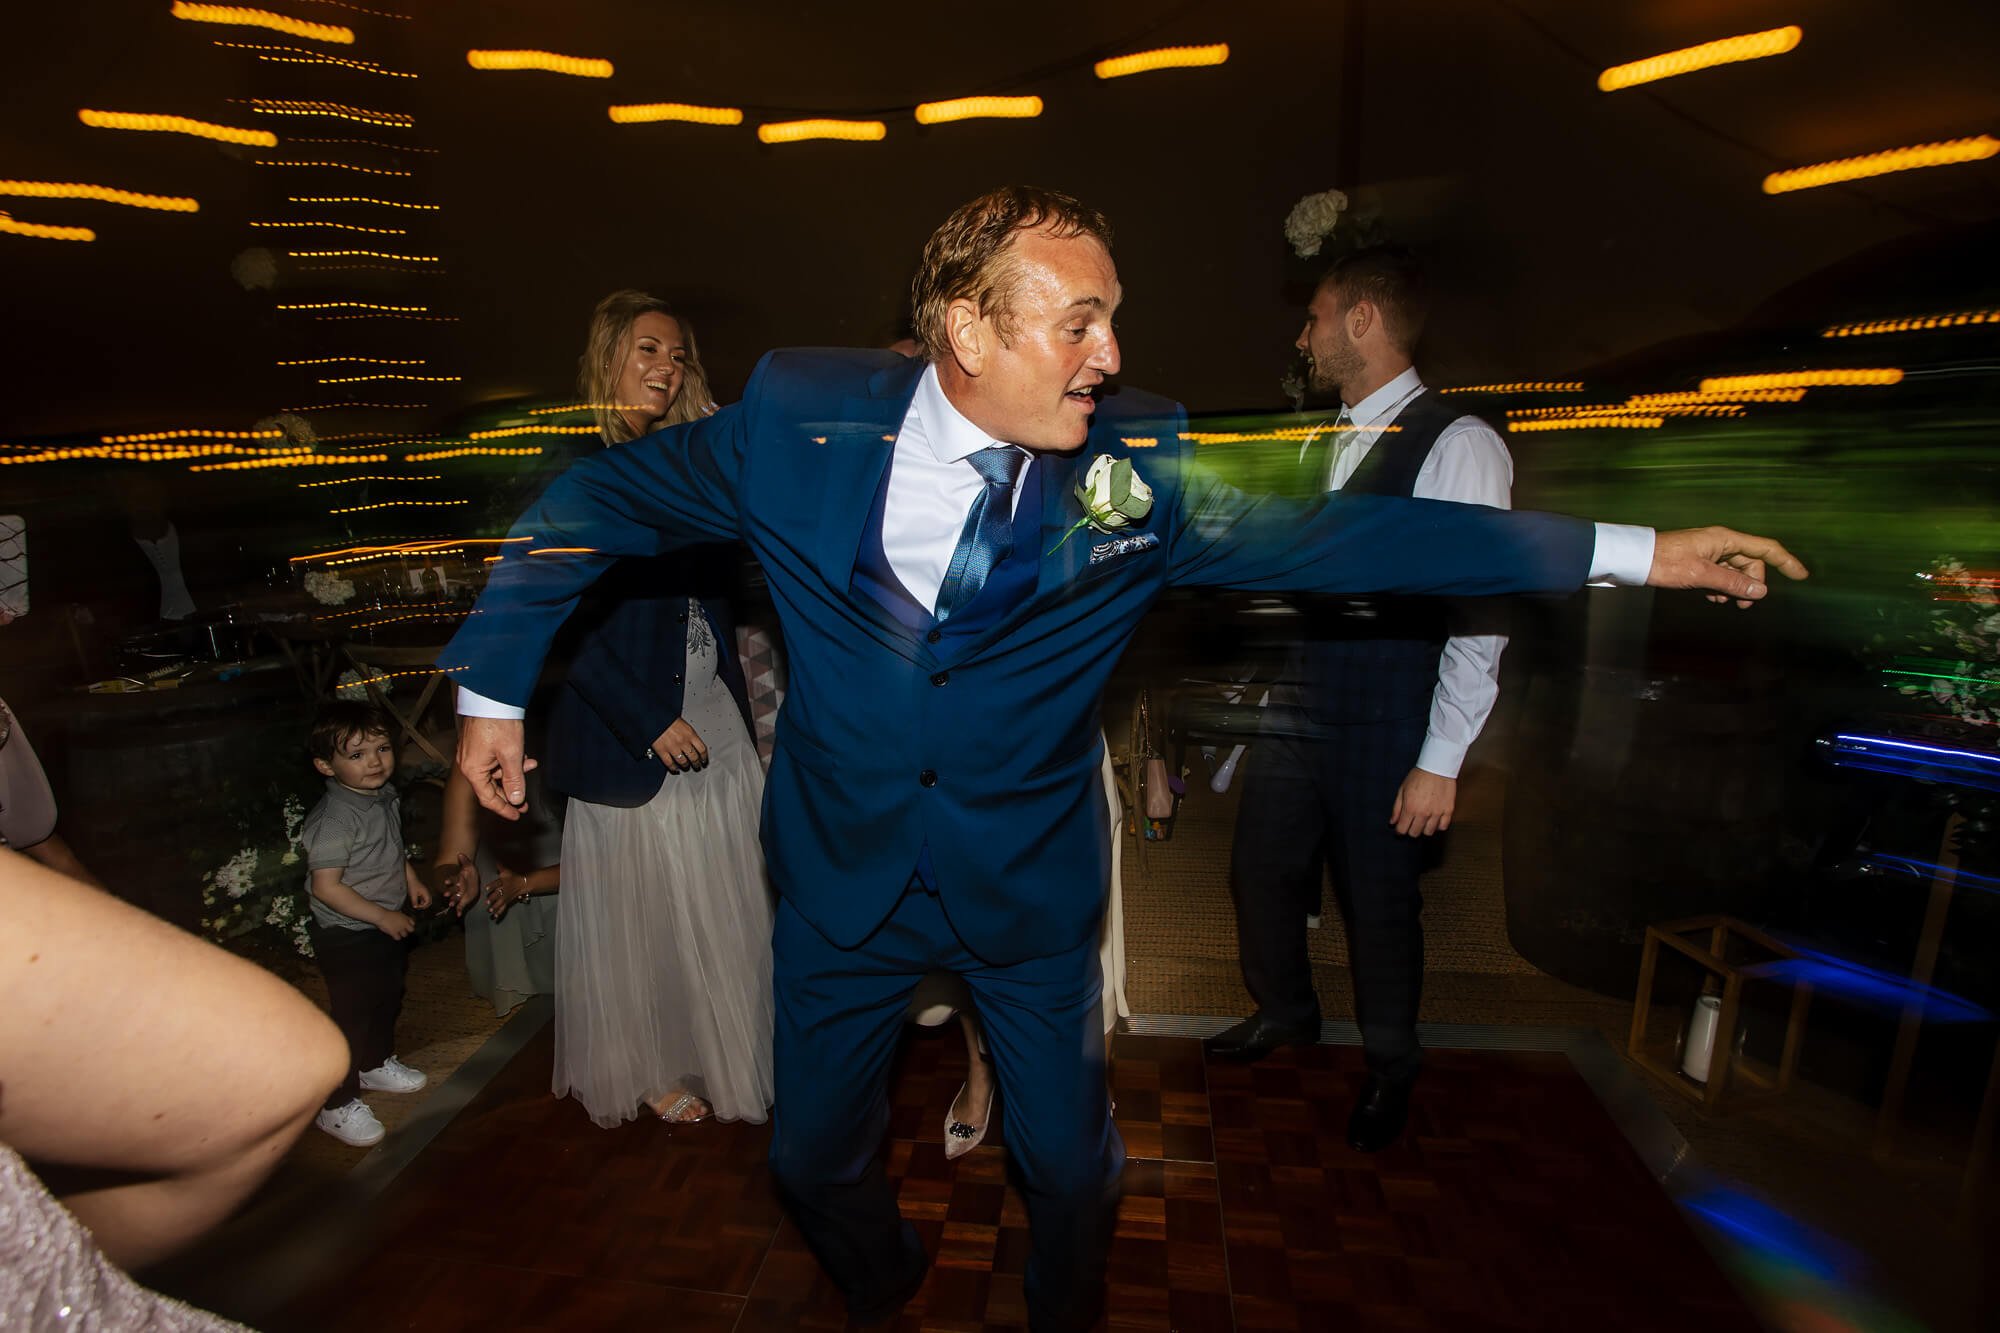 Wedding guests dancing the night away